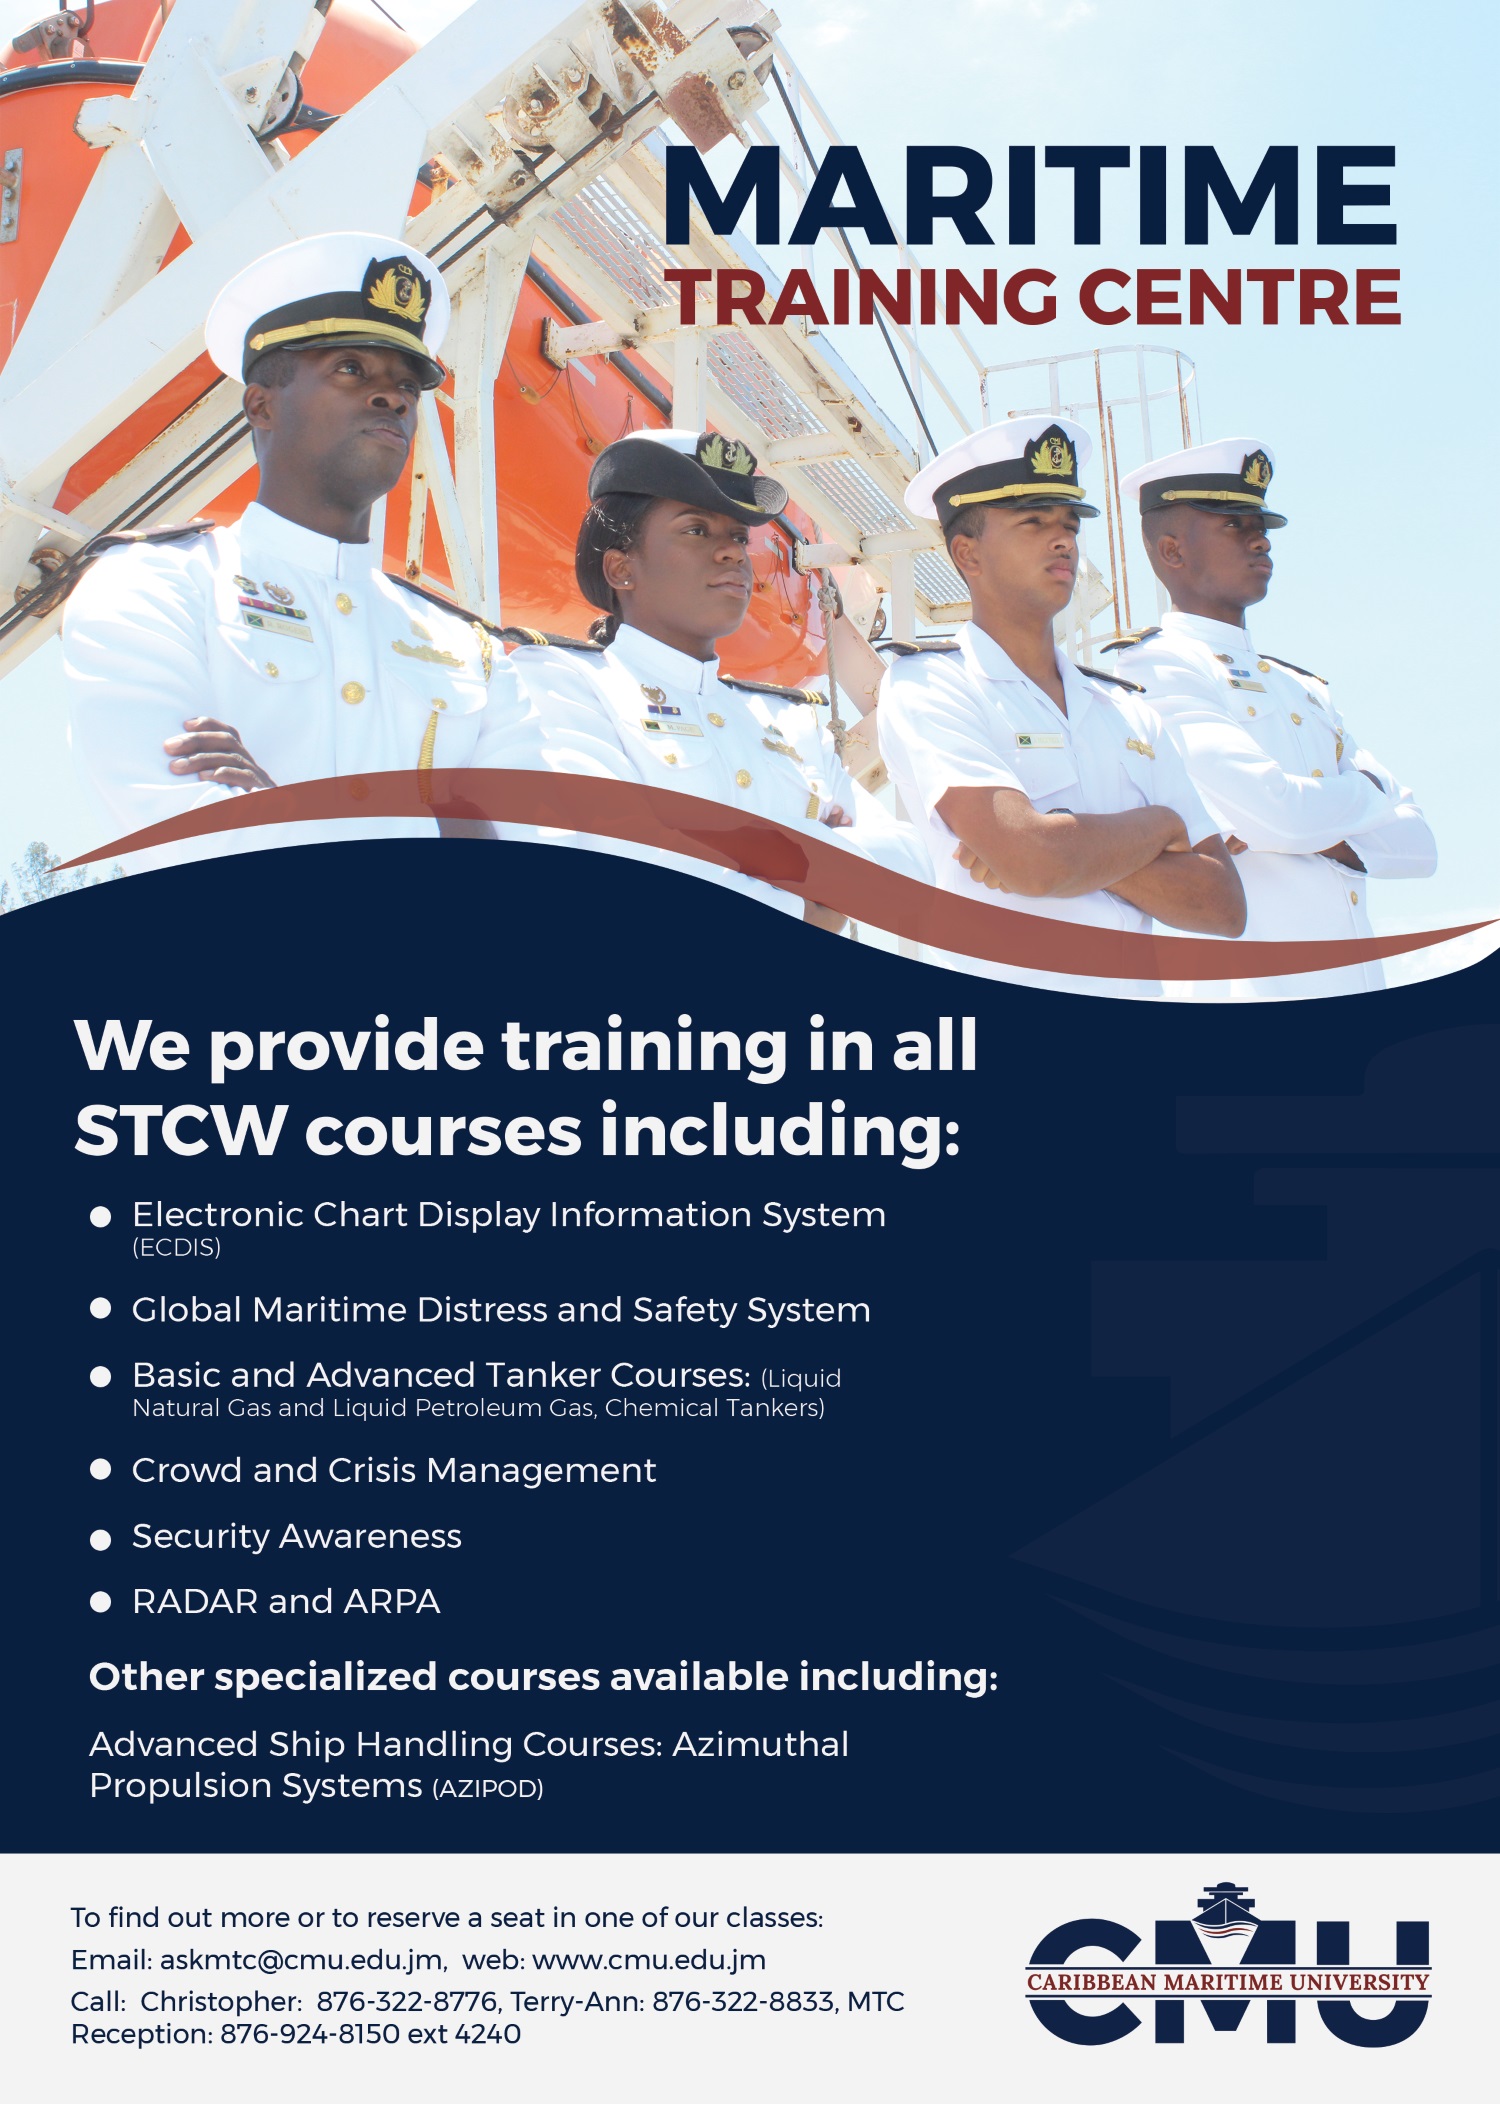 Maritime Training Centre Caribbean Maritime University